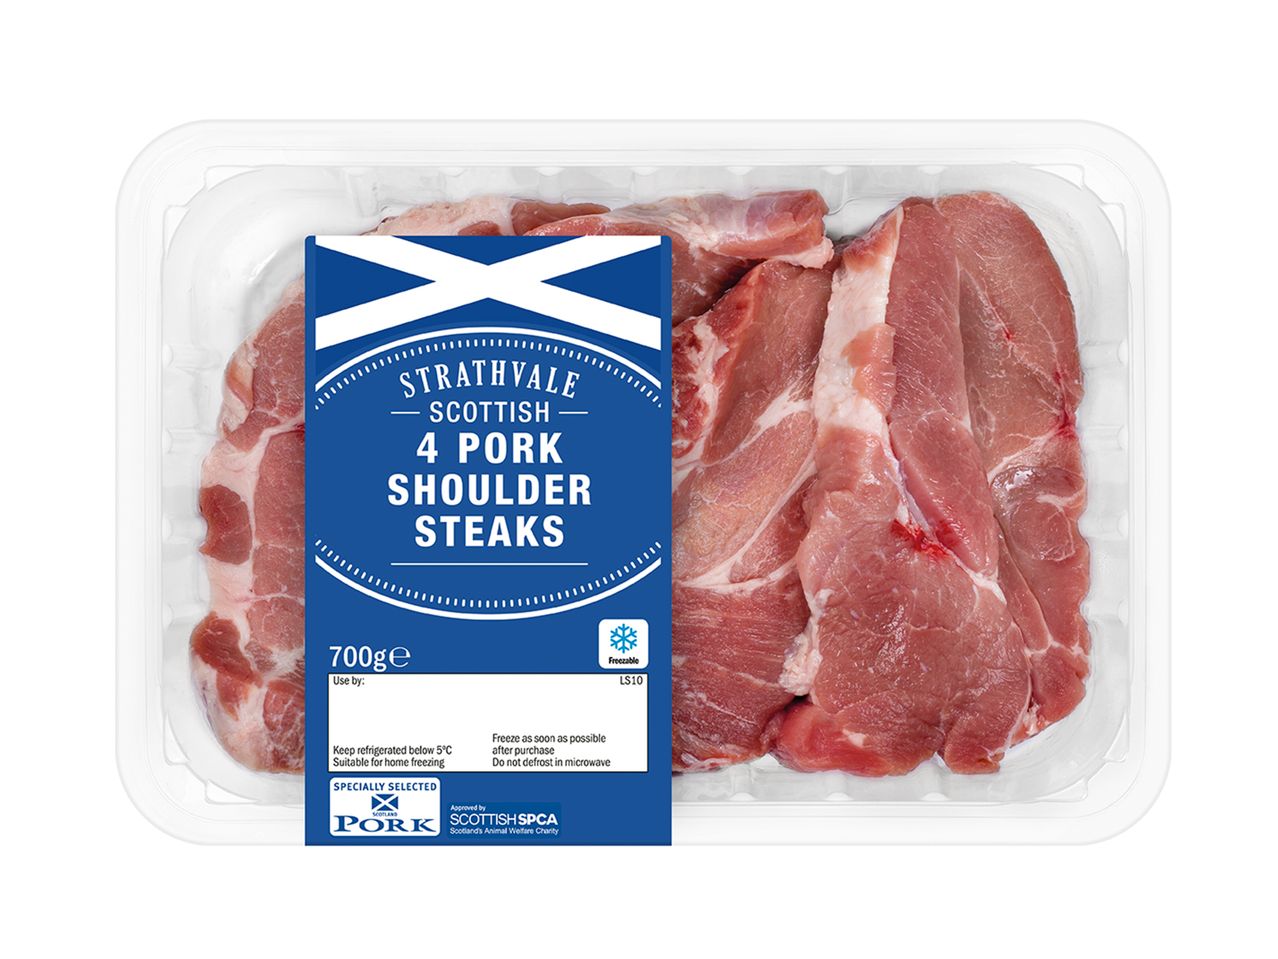 Go to full screen view: Strathvale Scottish 4 Pork Shoulder Steaks - Image 1